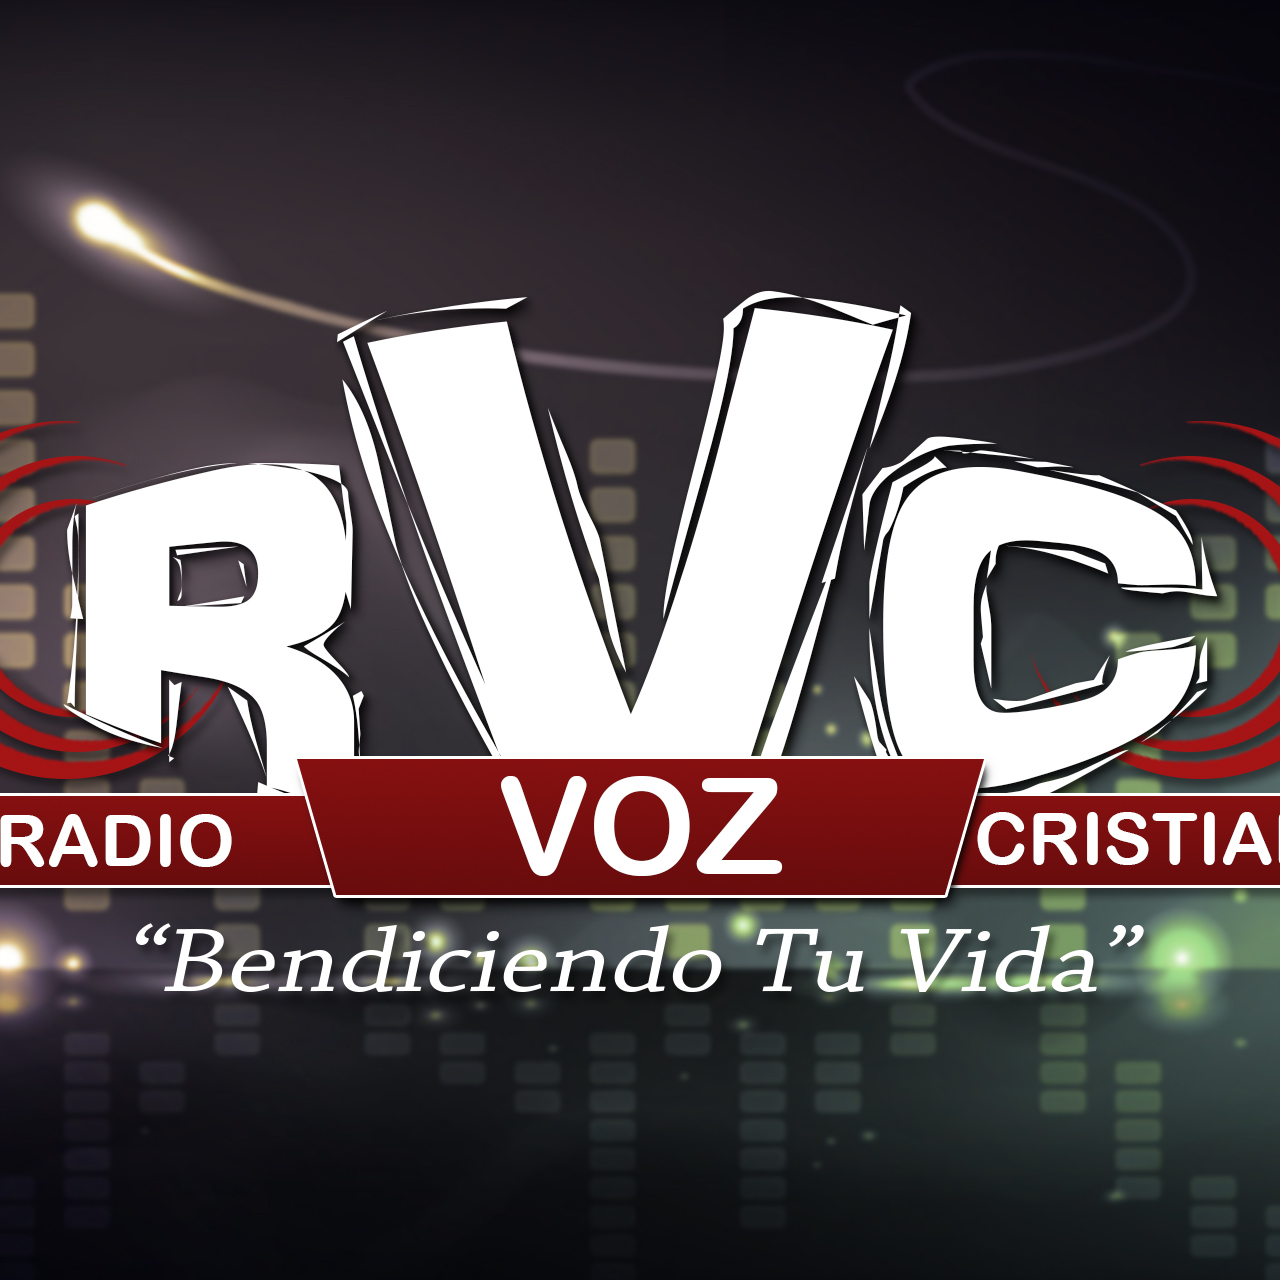 Radio Voz Cristiana 97.7 FM